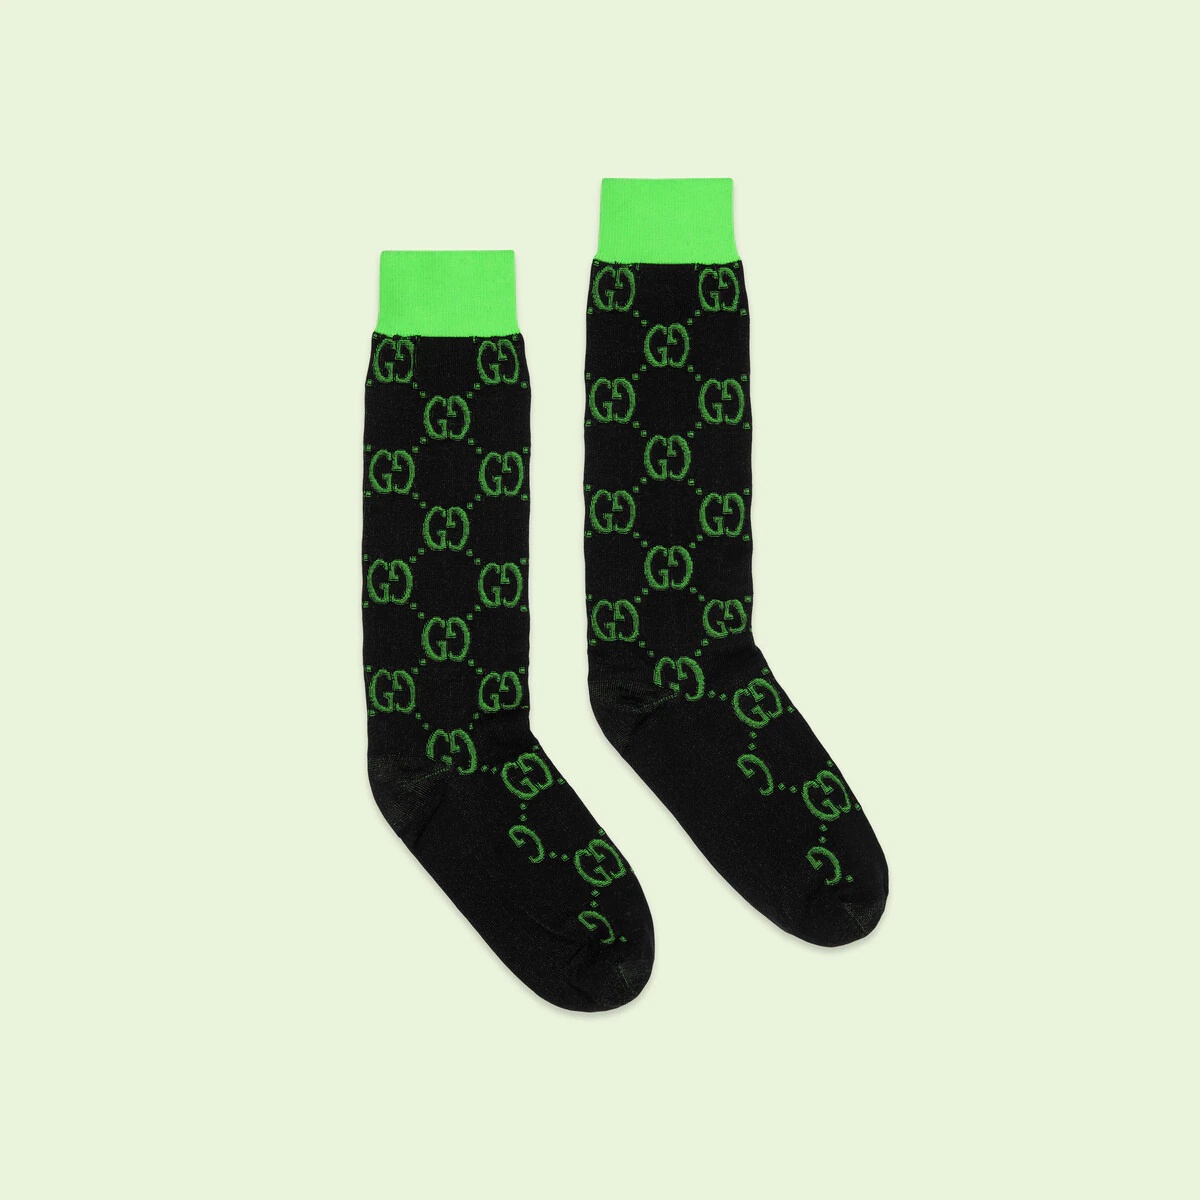 GG knit socks - 2